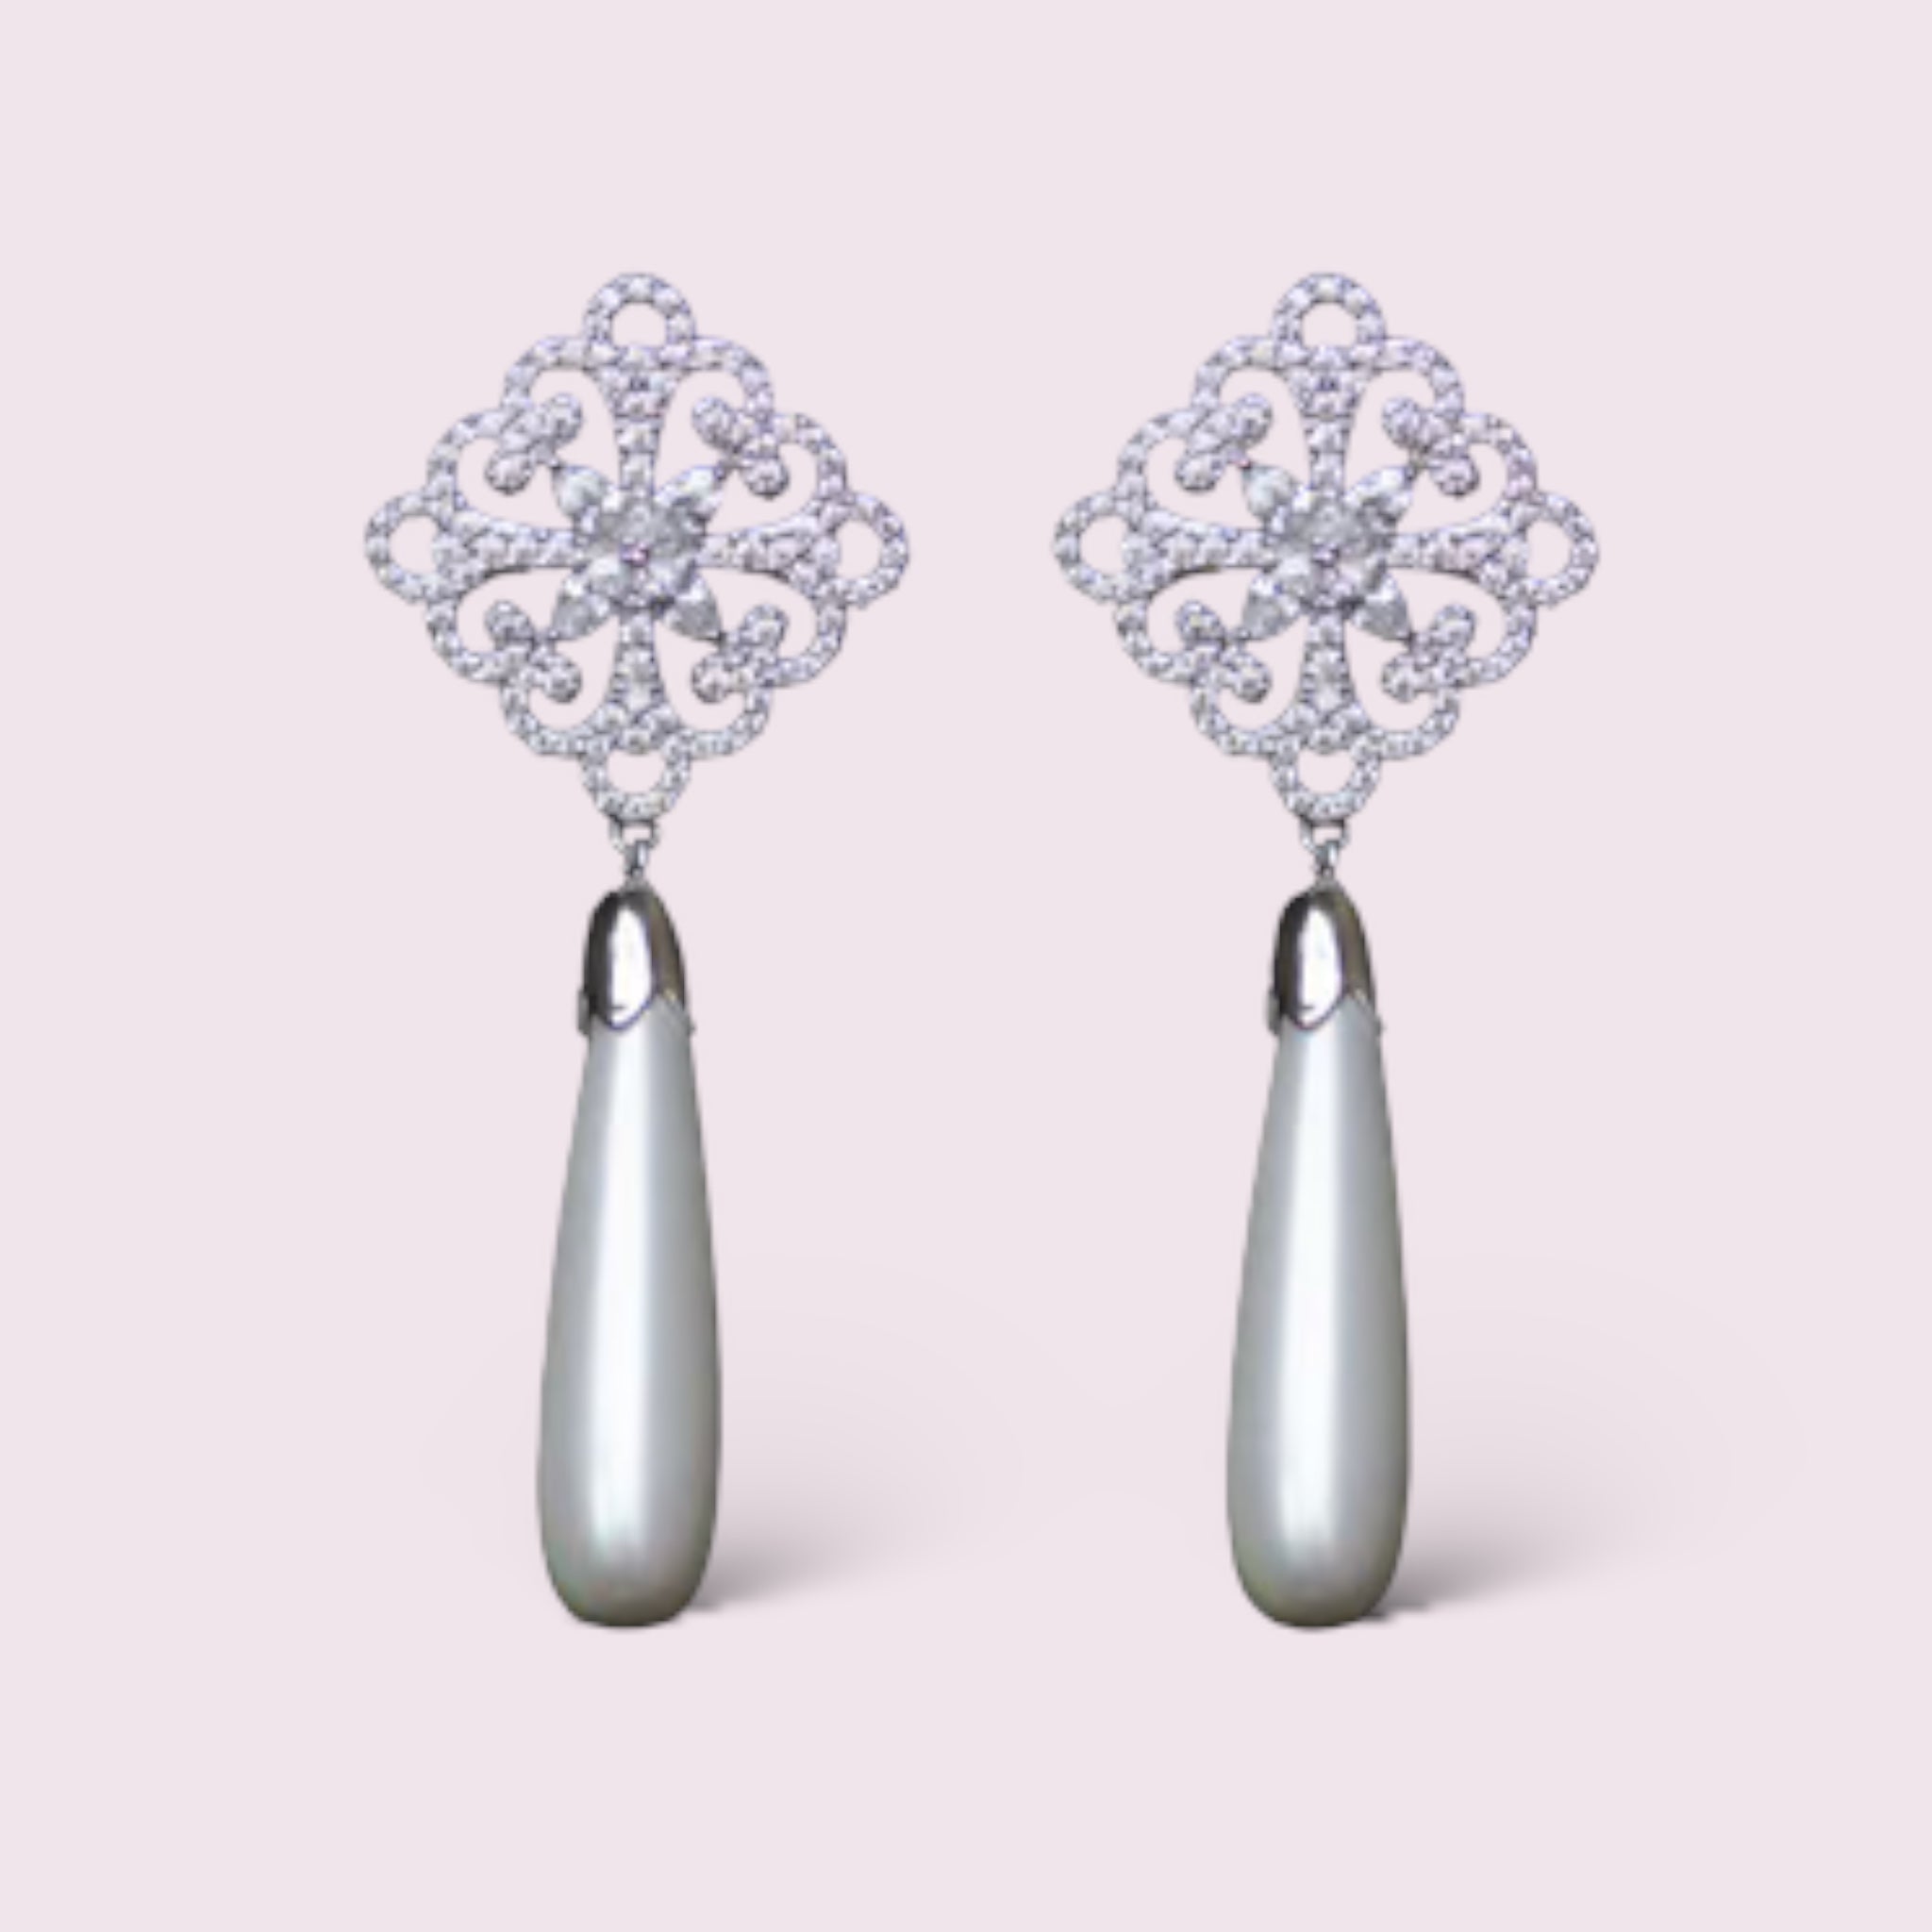 Teardrop Pearl CZ micro paved drop earrings, sterling silver posts, Bridal, Bridesmaids